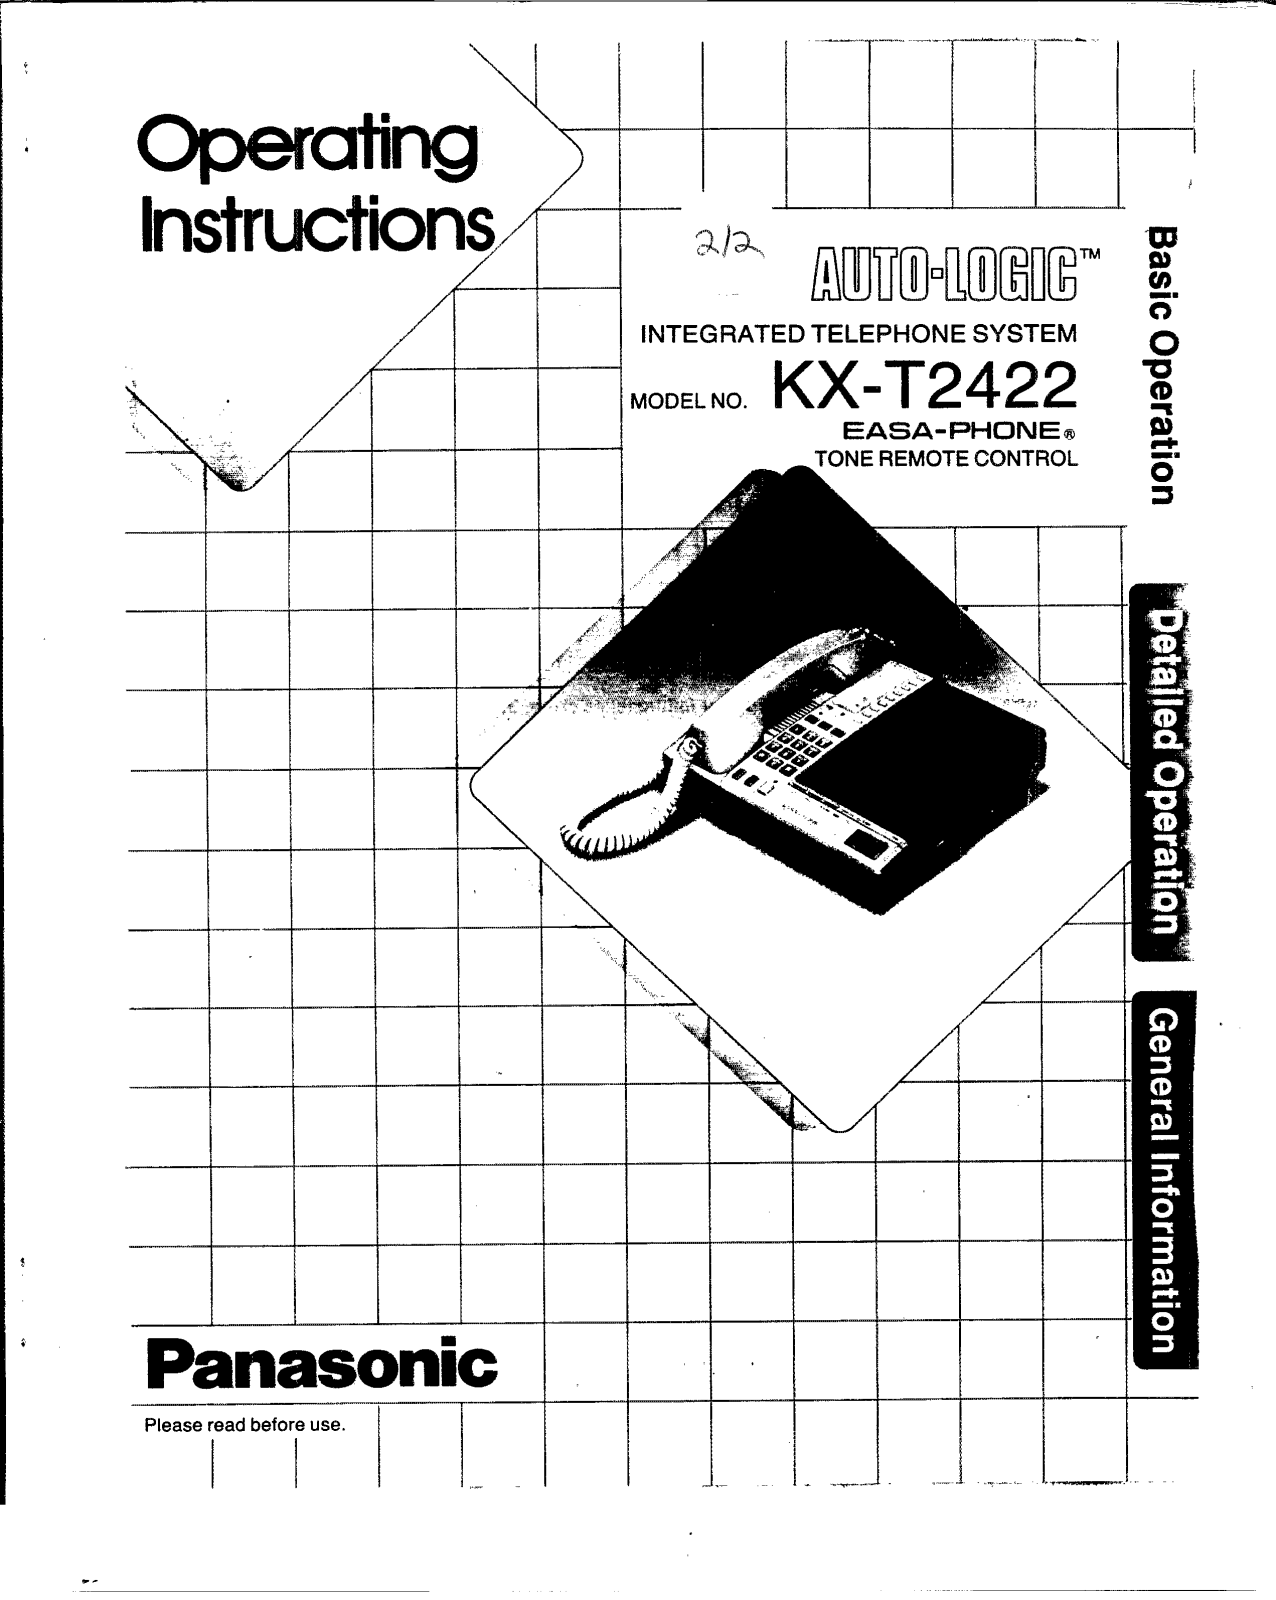 Panasonic KX-T2422 User Manual